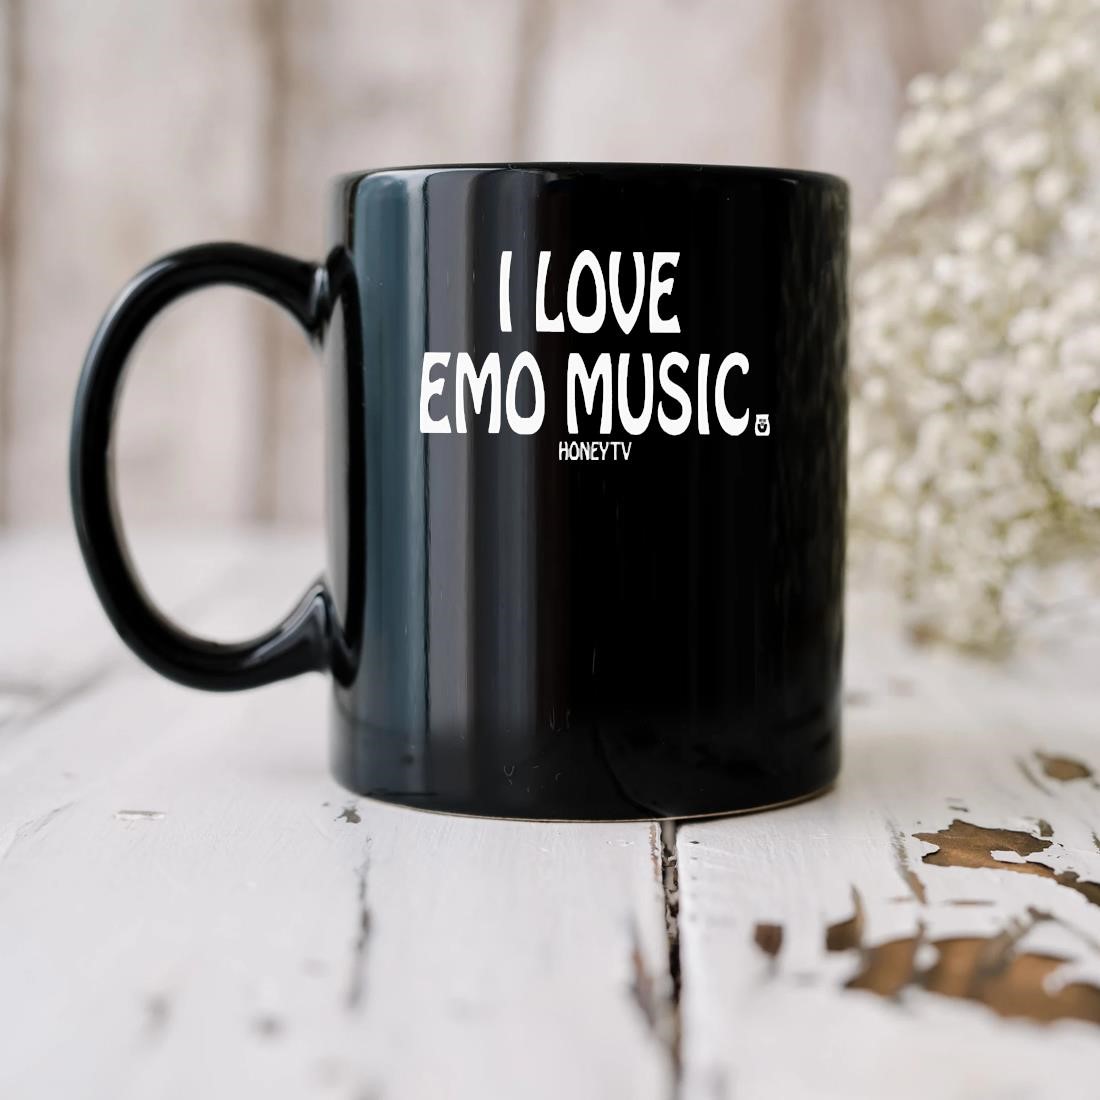 I Love Emo Music Honey Tv Mug biu.jpg